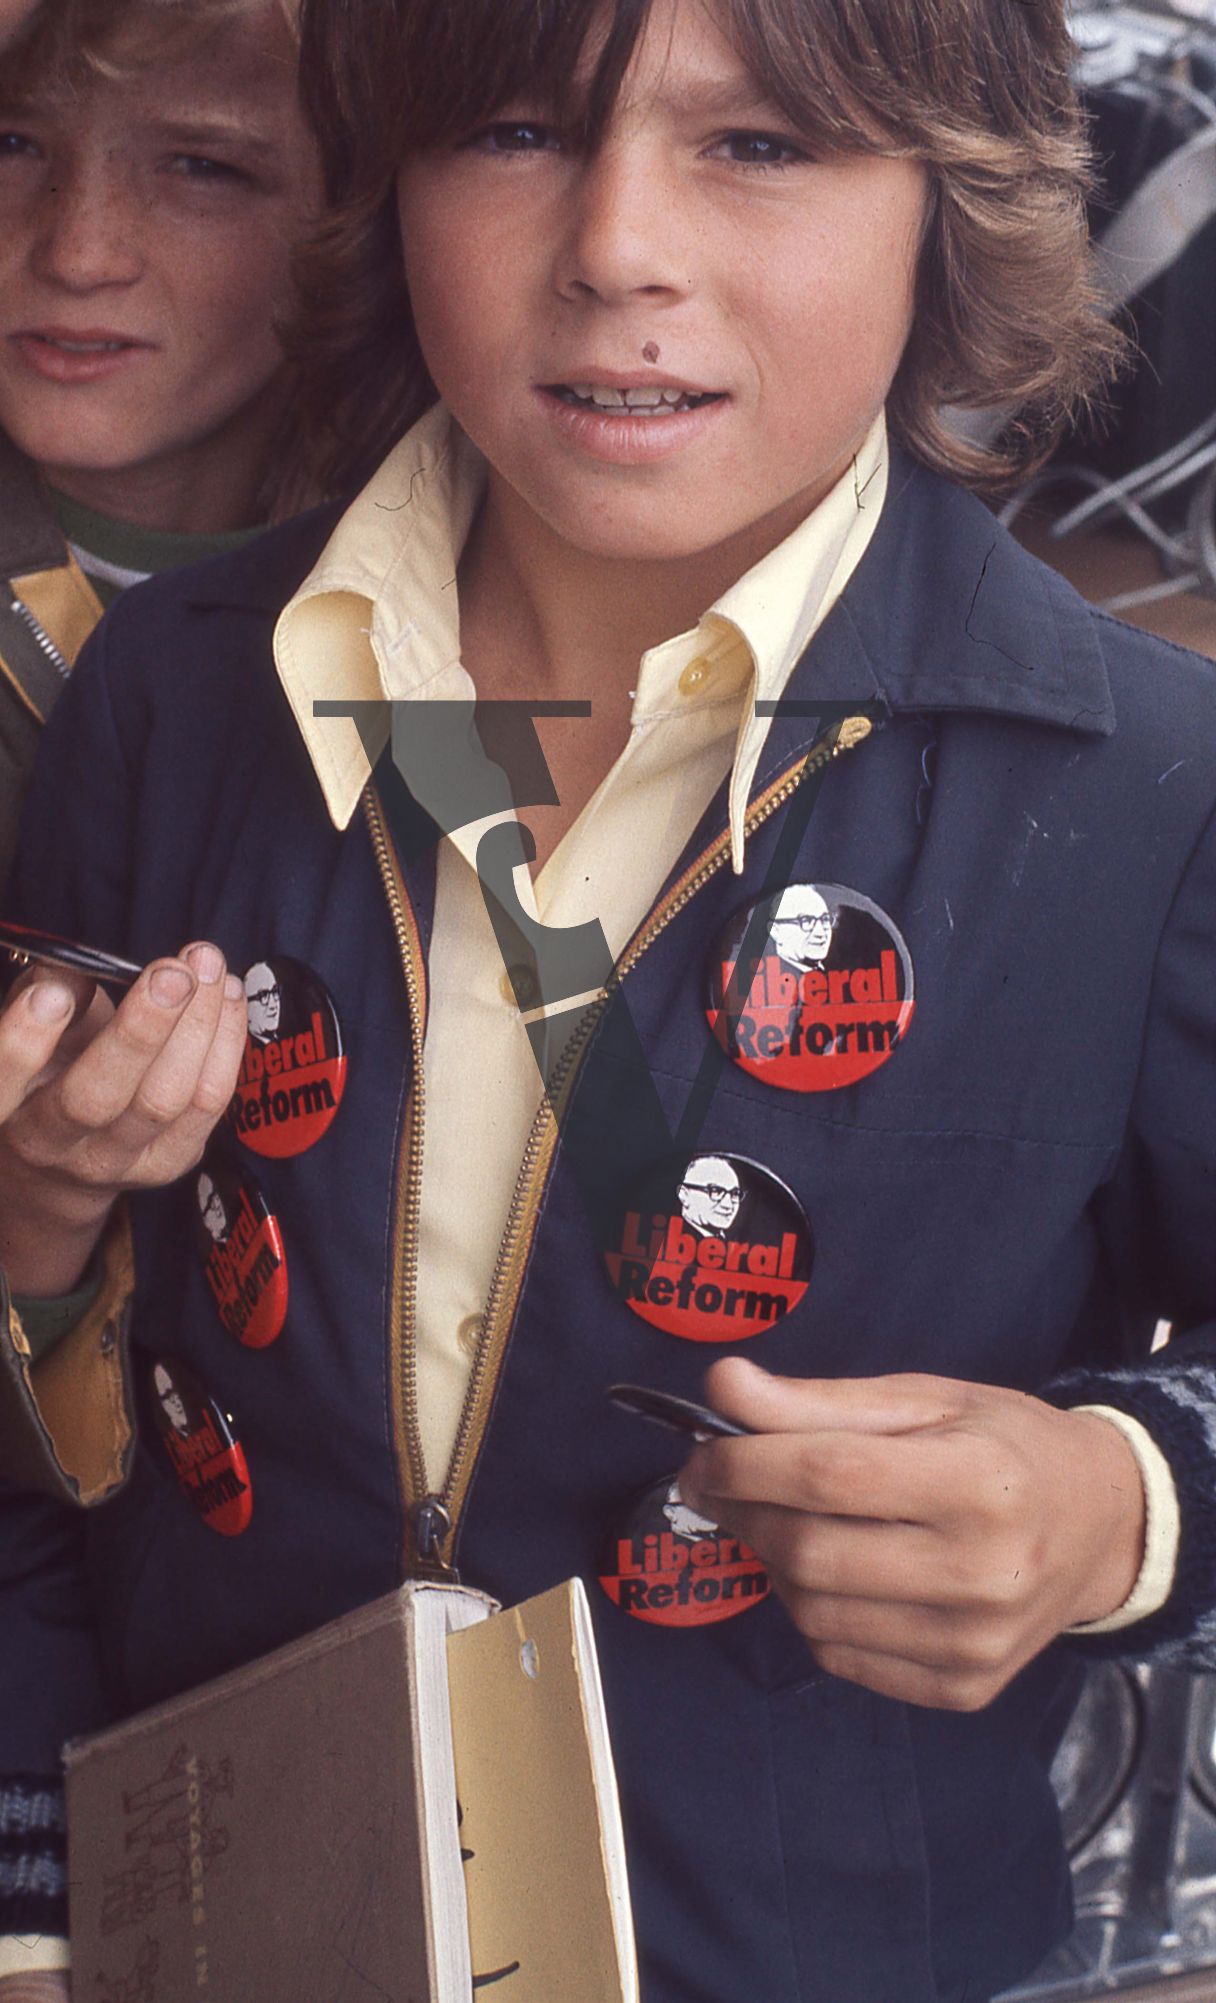 Newfoundland, Boy has many Joey Smallwood campaign buttons on blue jacket.